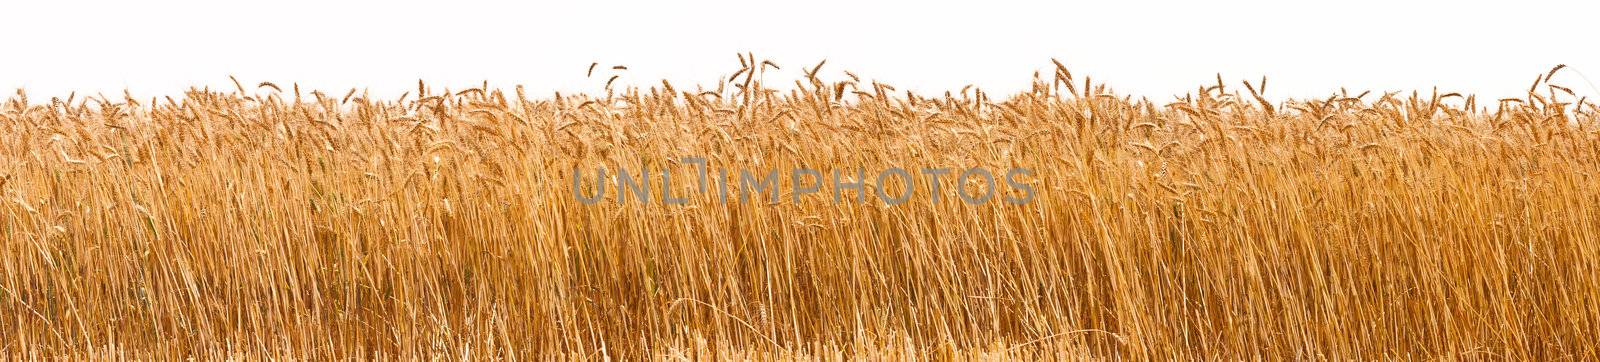 Panorama shot of a wheat plantation